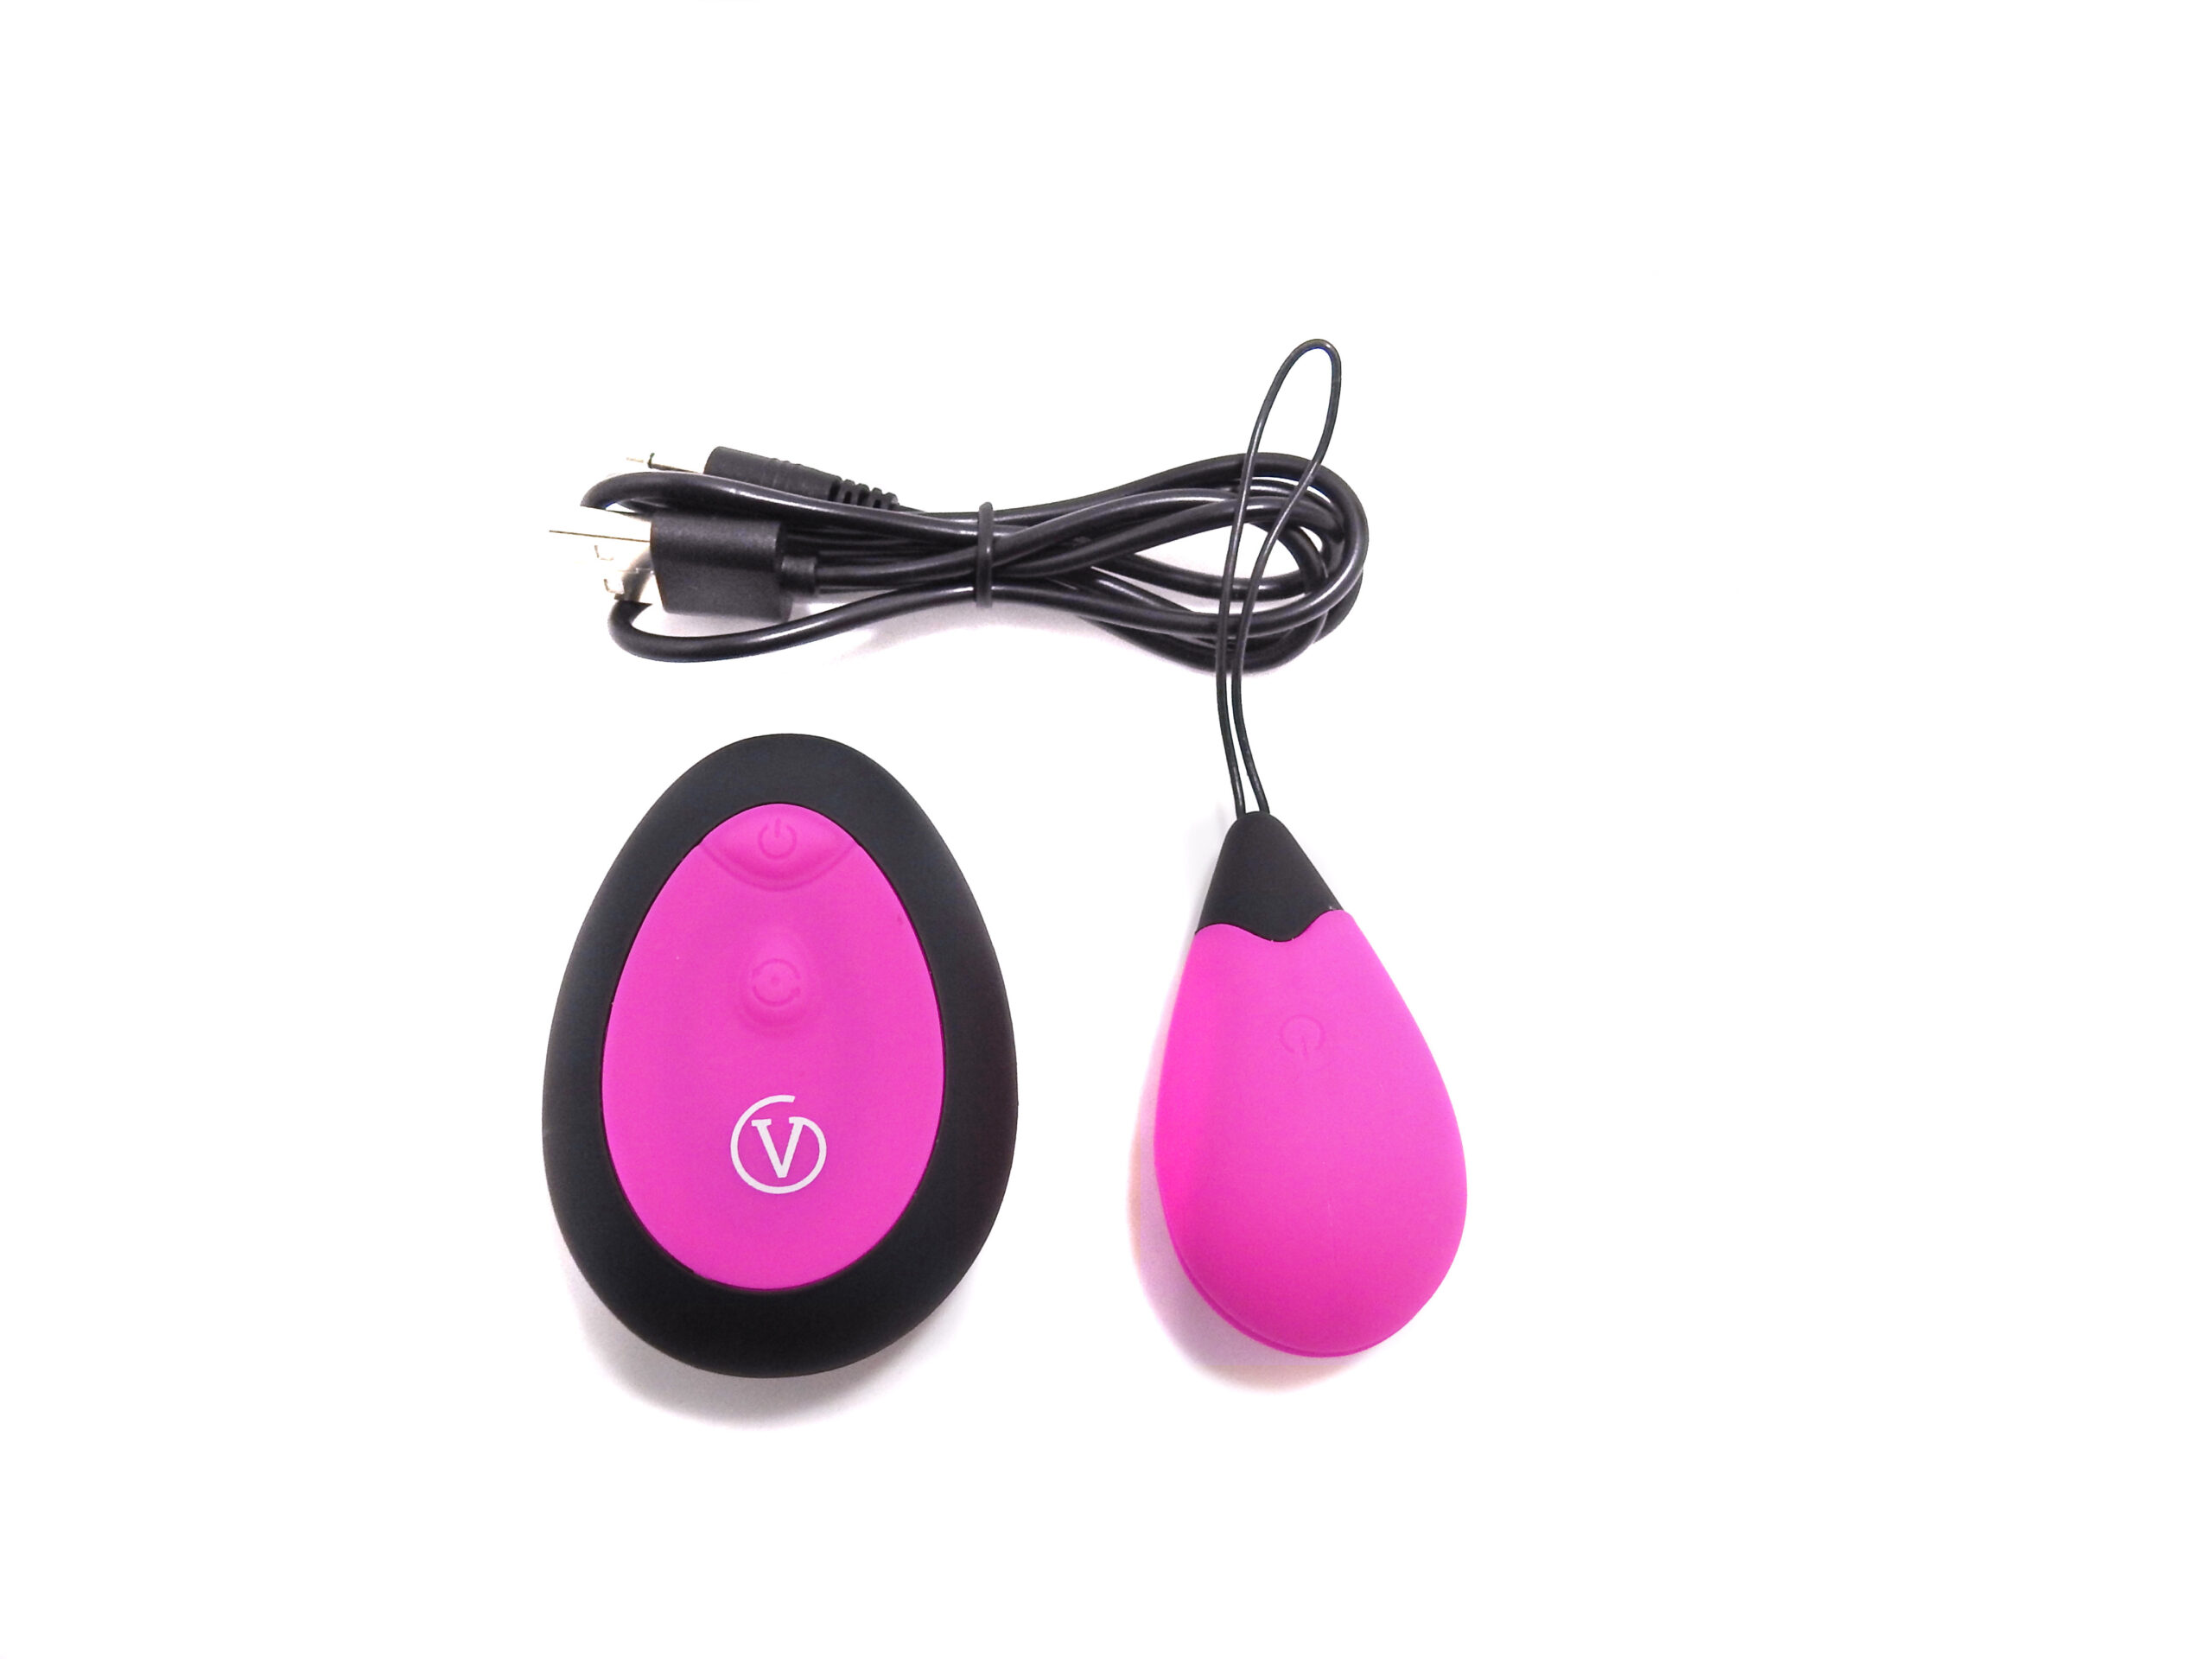 Remote-Control-Egg-G1-Pink-OPR-3090029-2